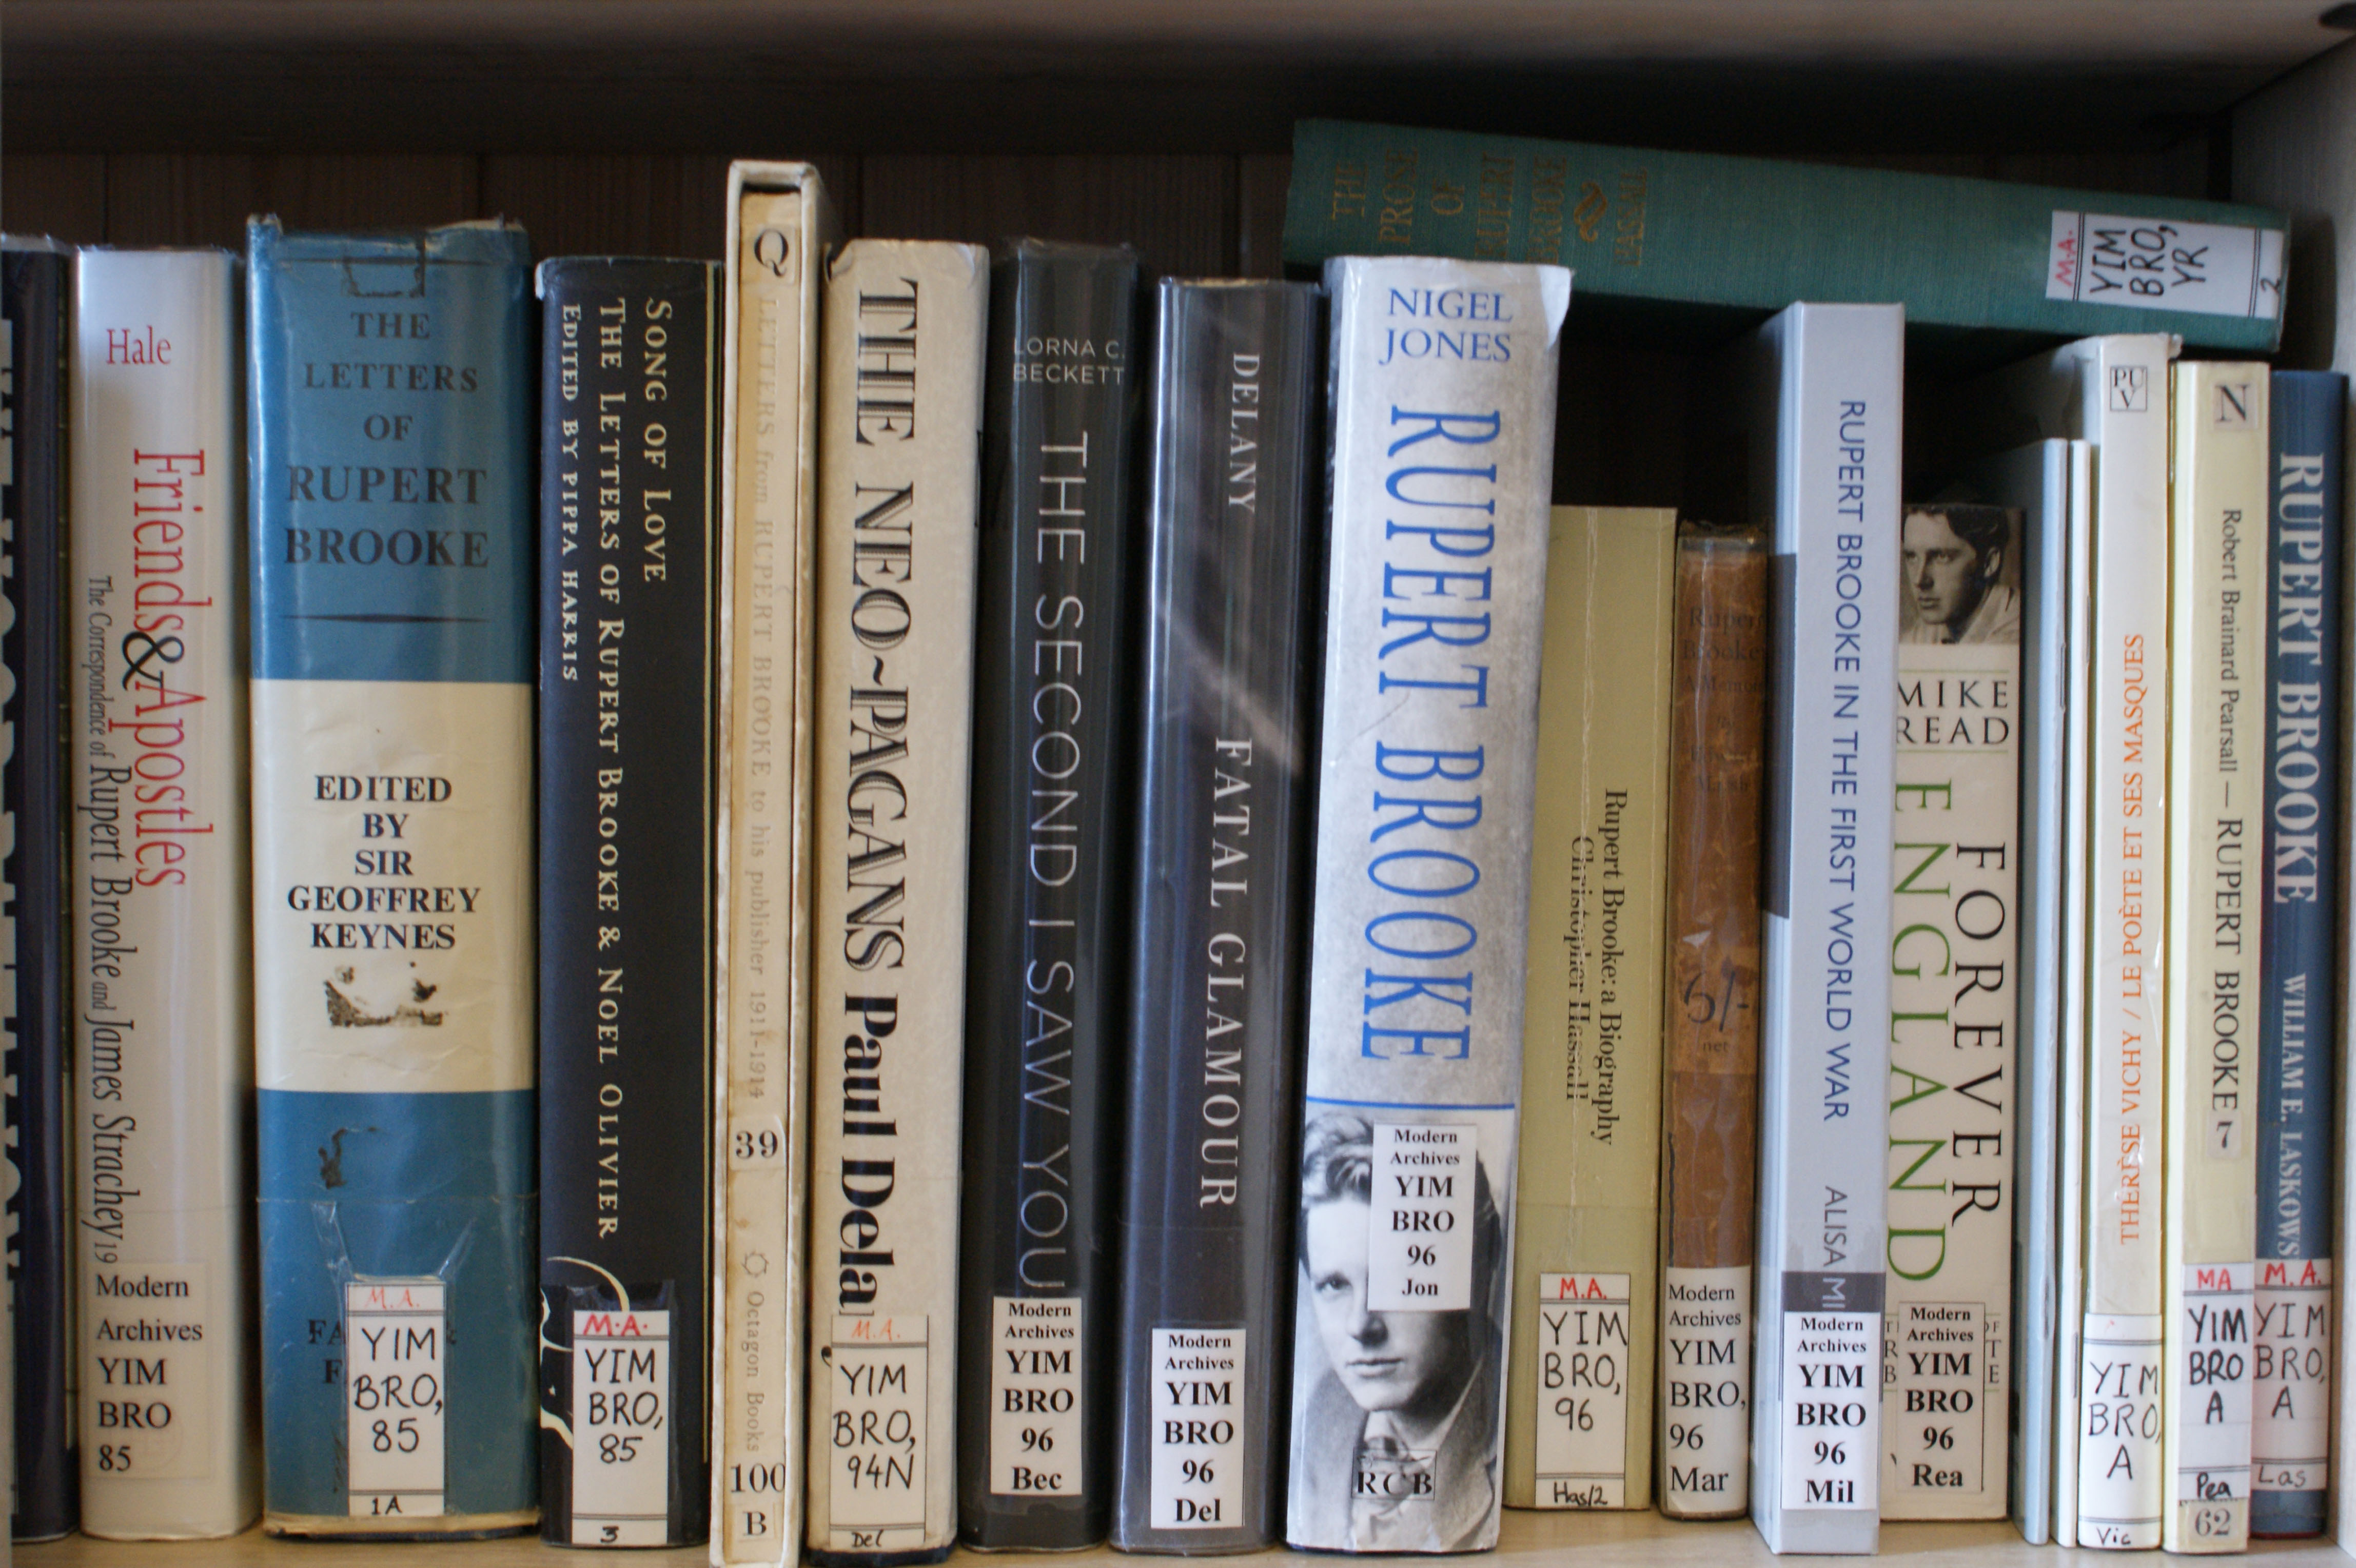 Shelf of books relating to Rupert Brooke